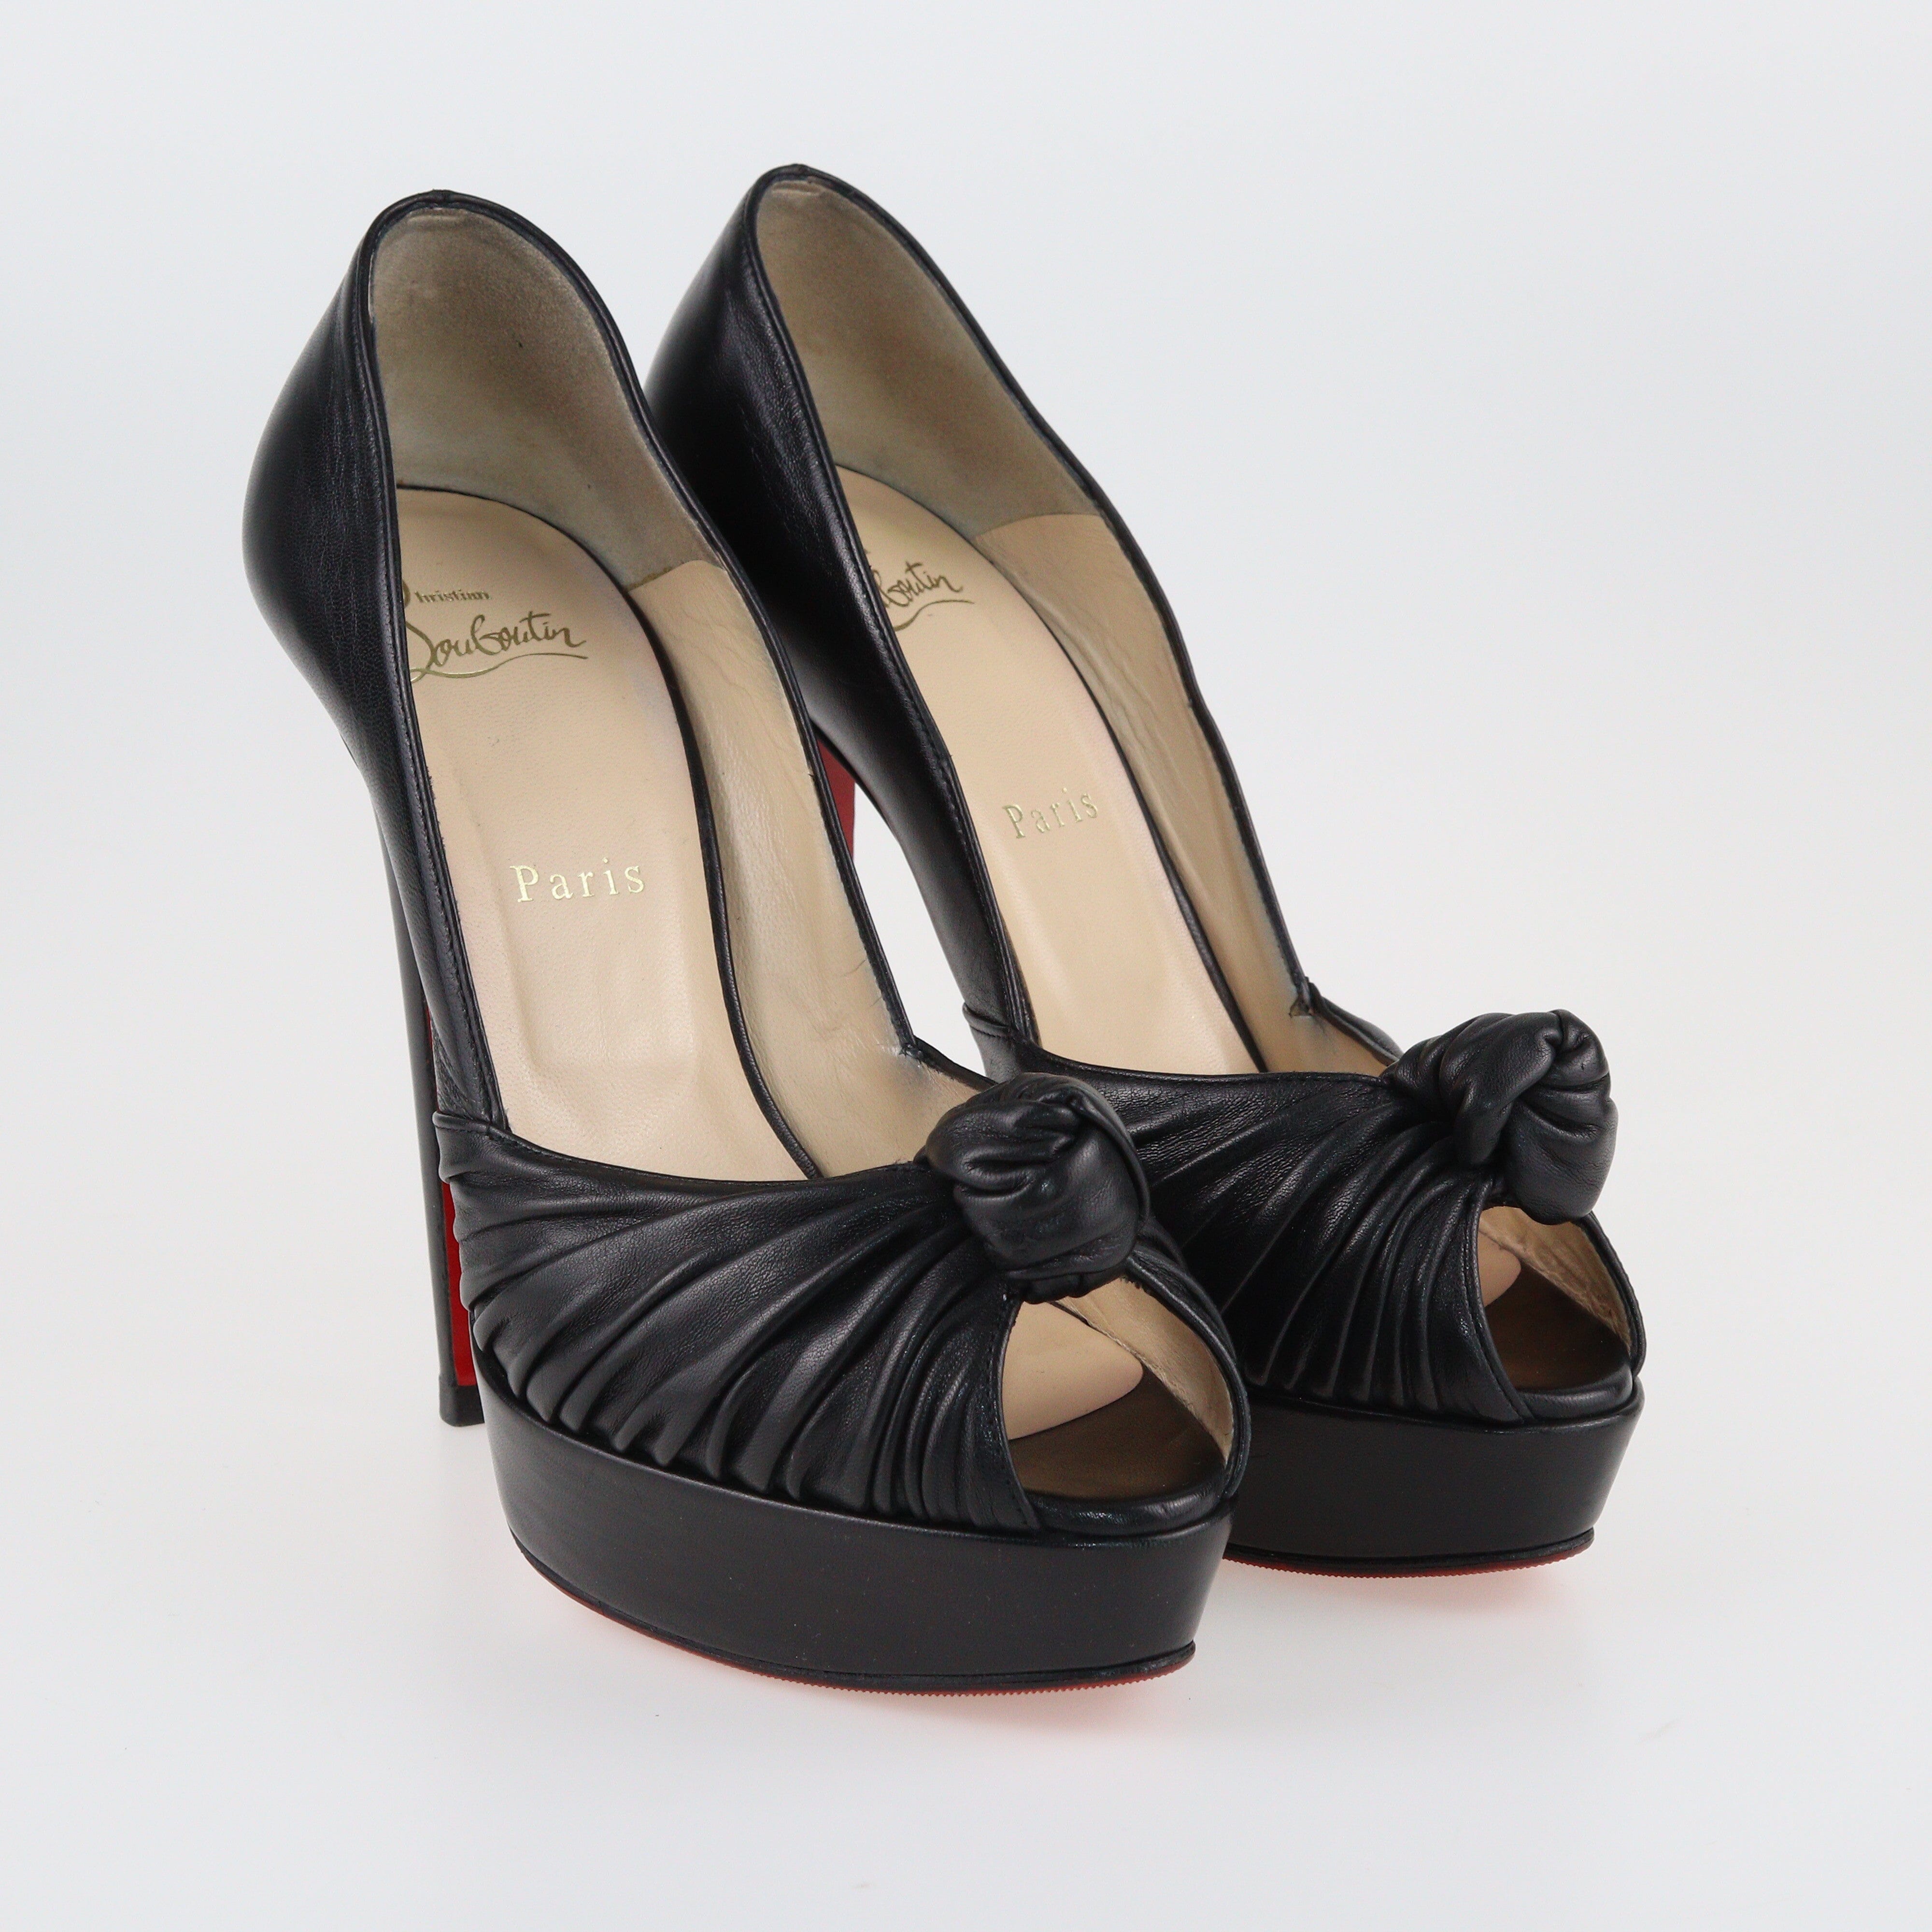 Black Jenny Knot Peep Toe Platform Pumps Shoes Christian Louboutin 